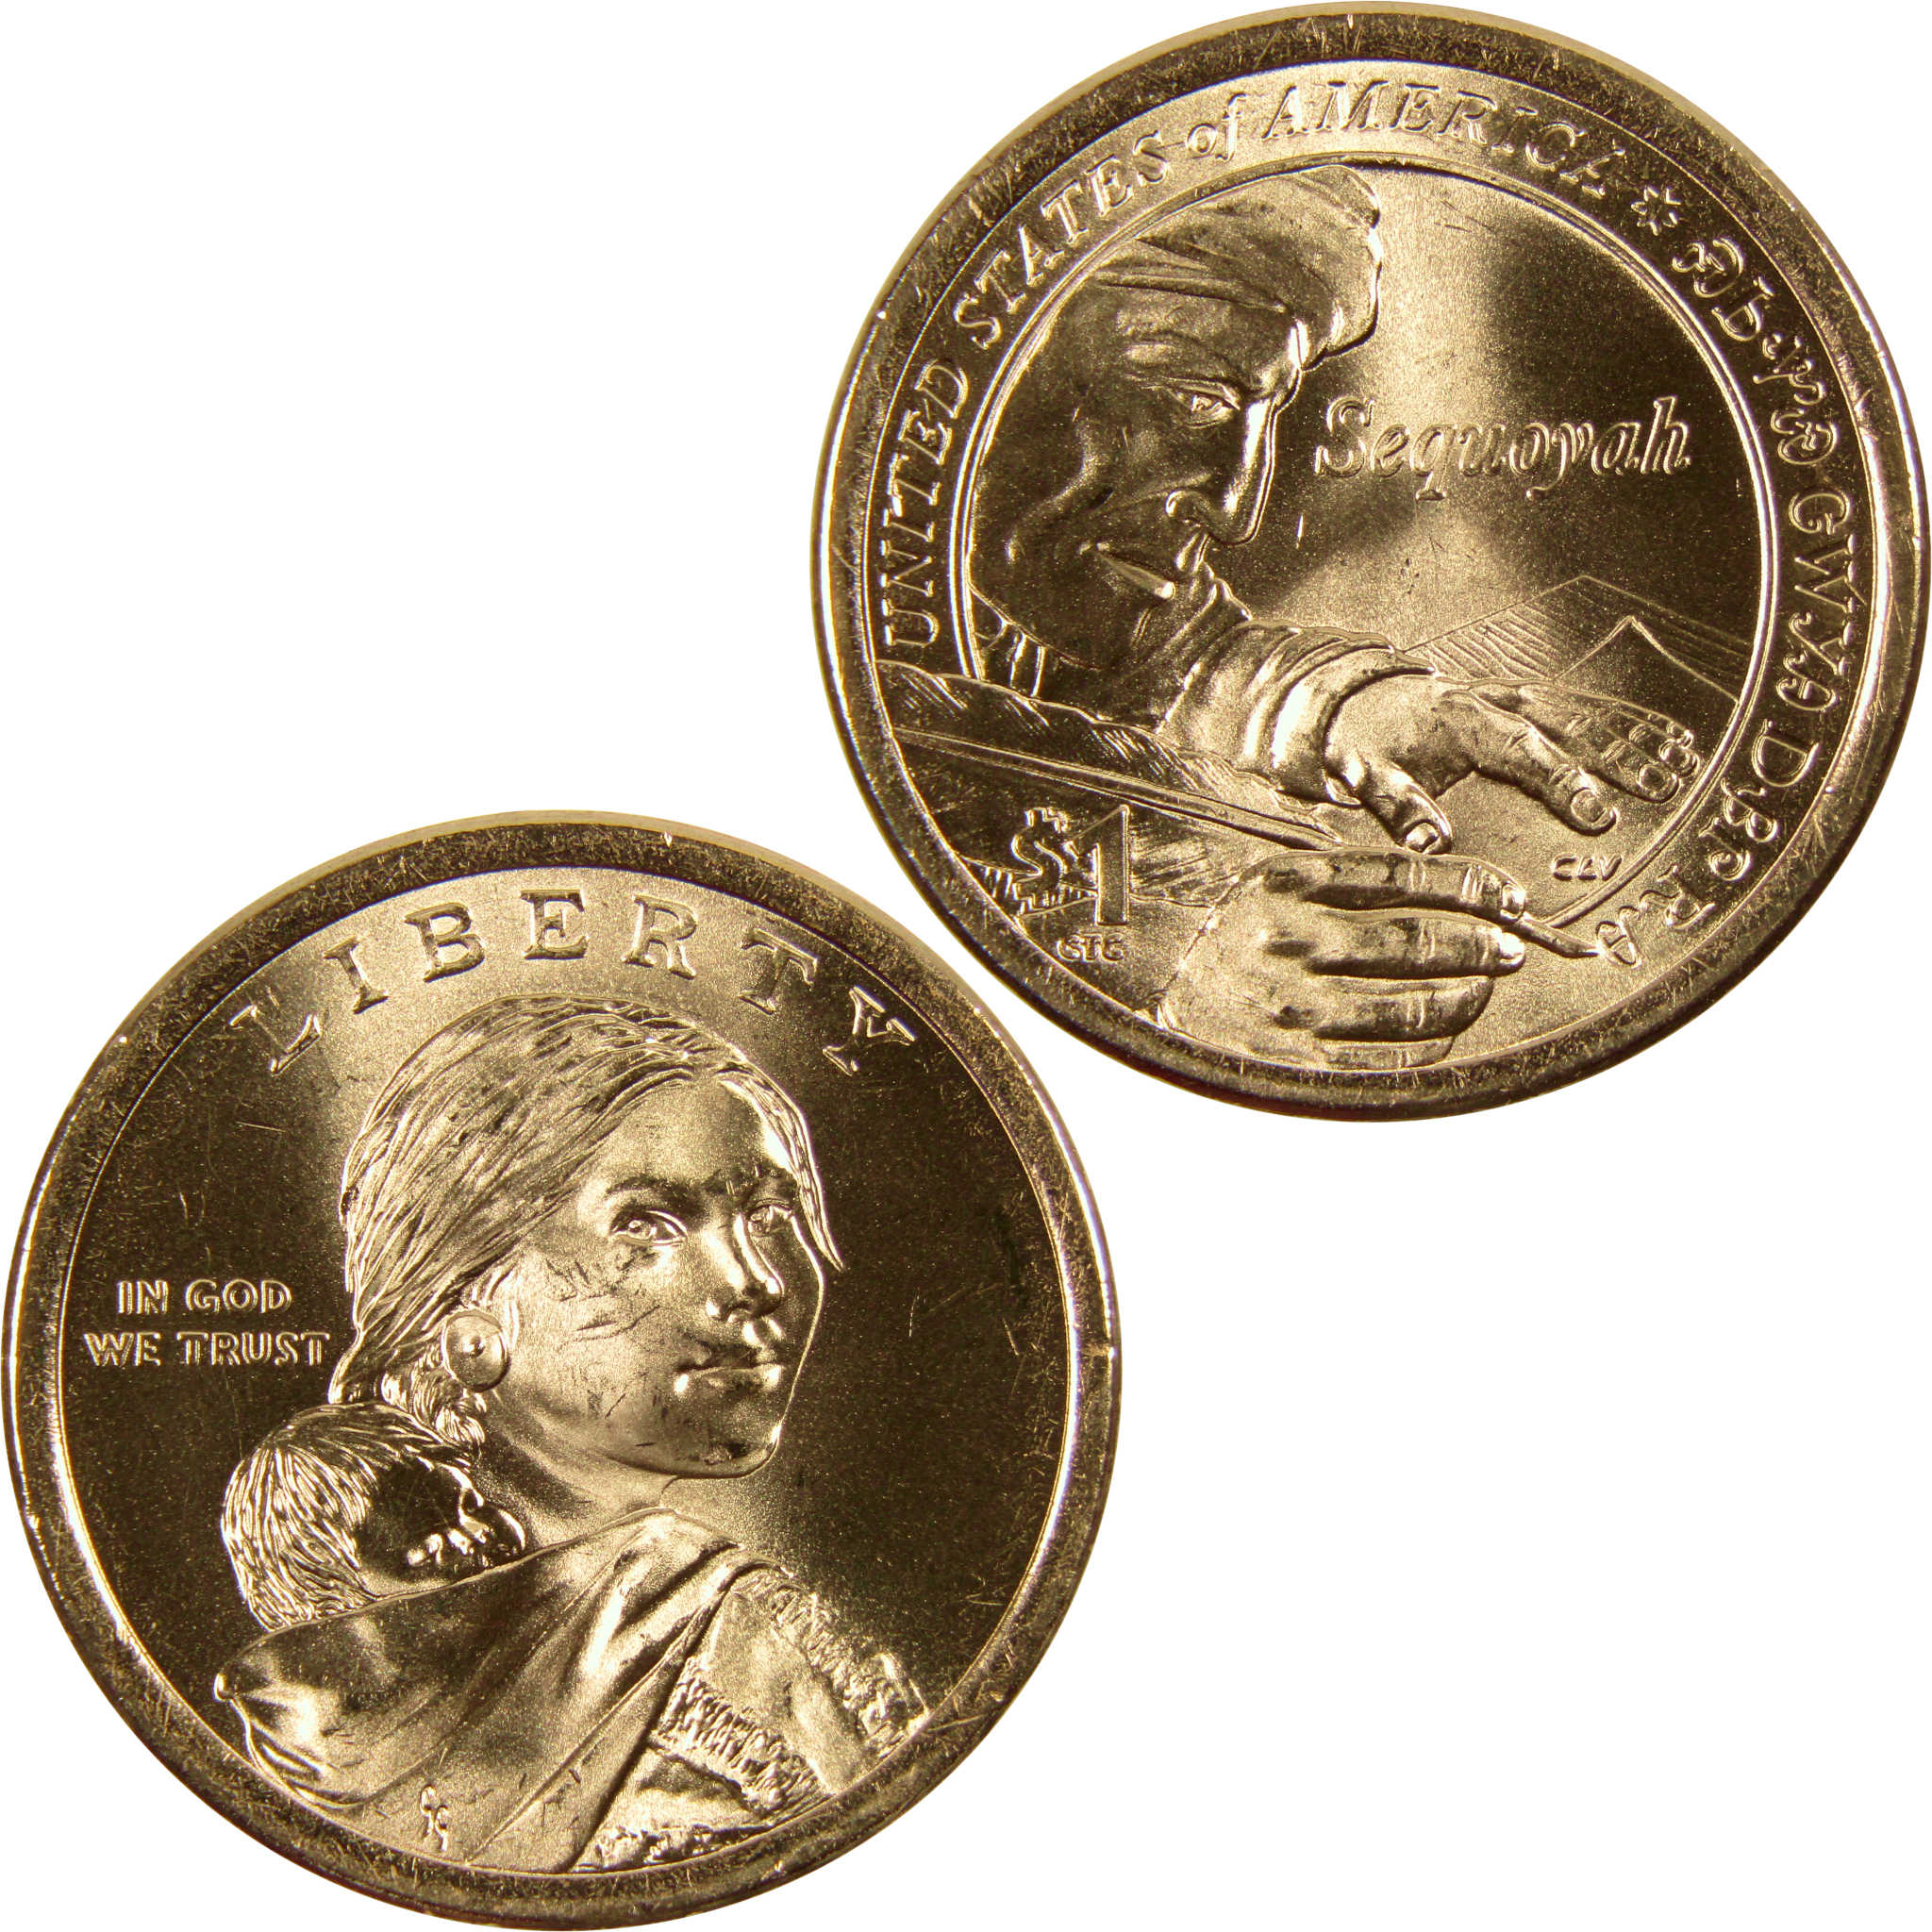 2017 P Sequoyah Native American Dollar BU Uncirculated $1 Coin